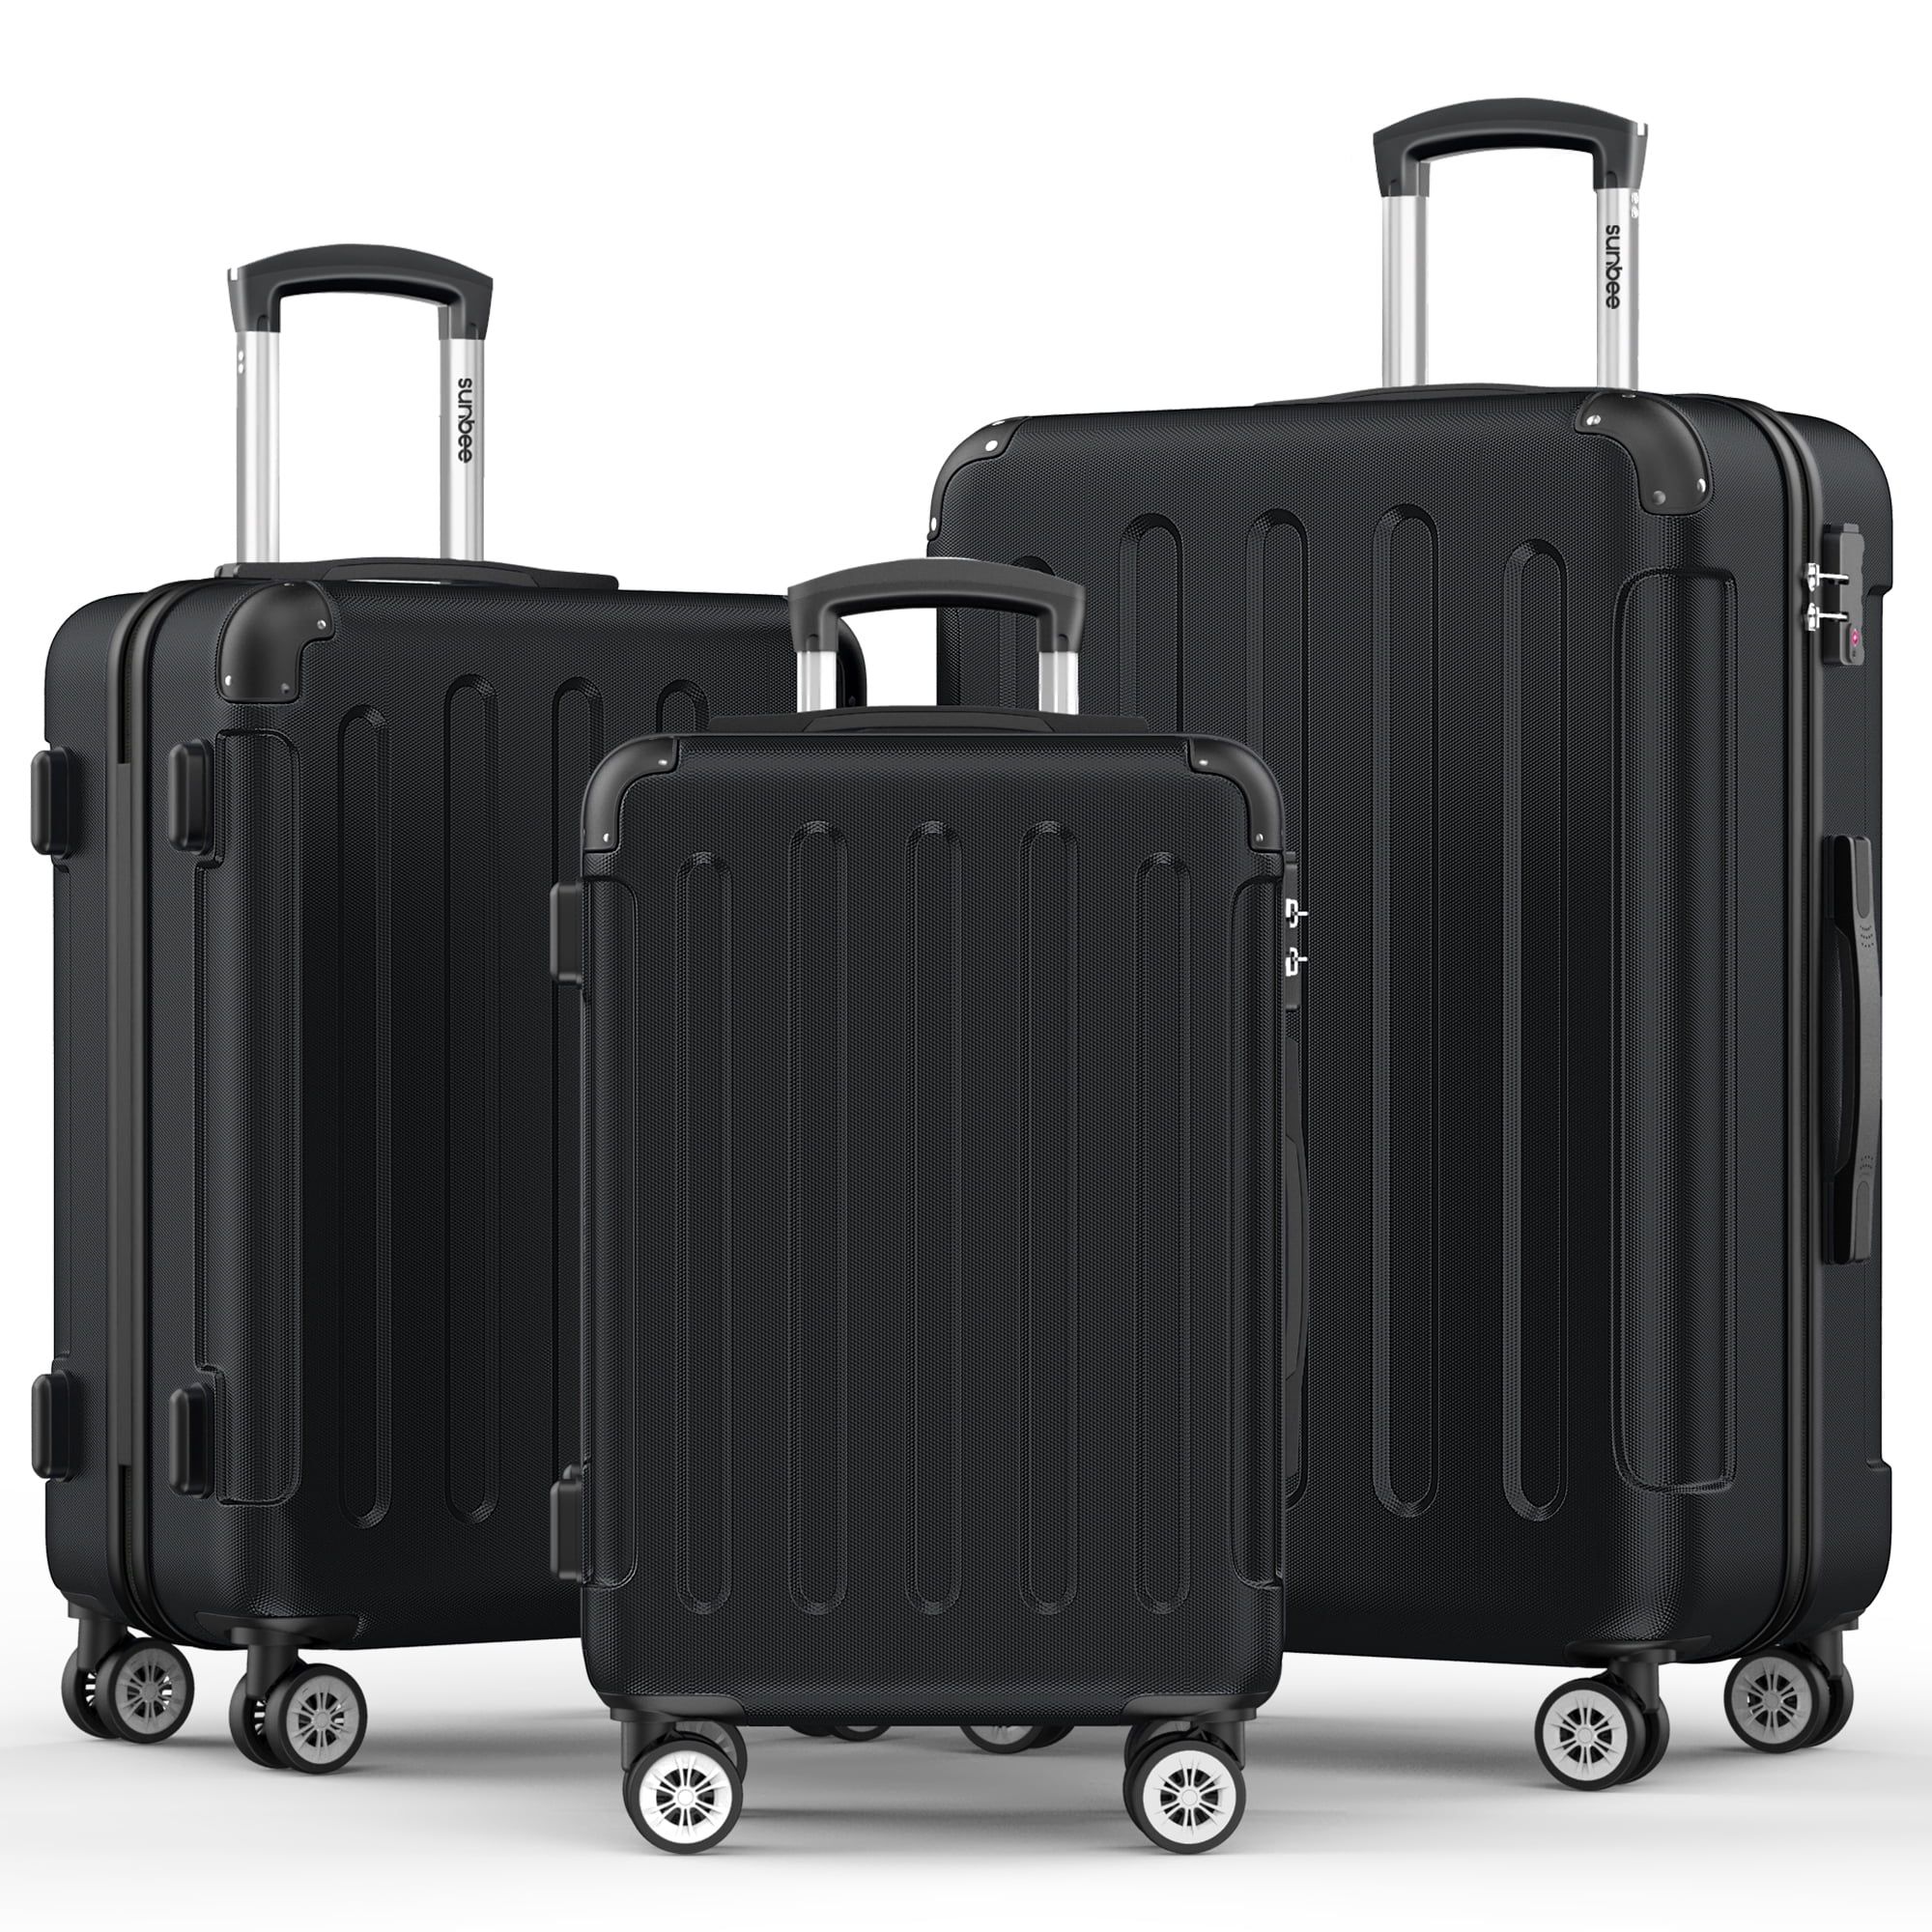 Sunbee 3 Piece Luggage Sets Hardshell Lightweight Suitcase with TSA Lock Spinner Wheels, Black | Walmart (US)